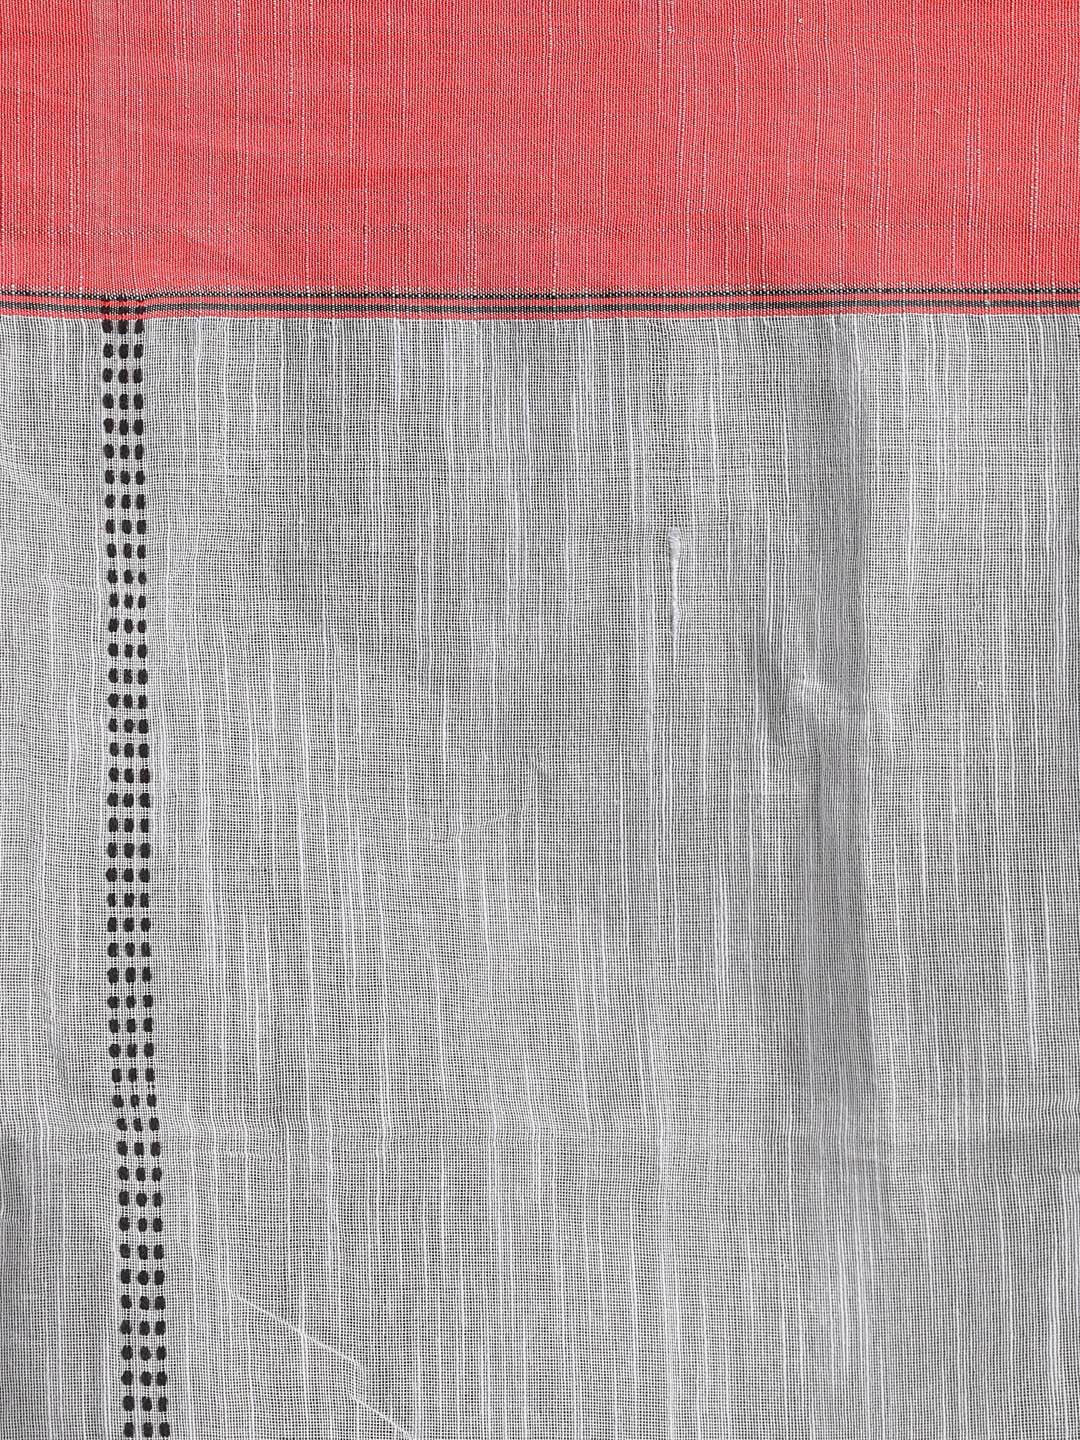 Indethnic Silver Bengal Handloom Cotton Blend Work Saree - Saree Detail View